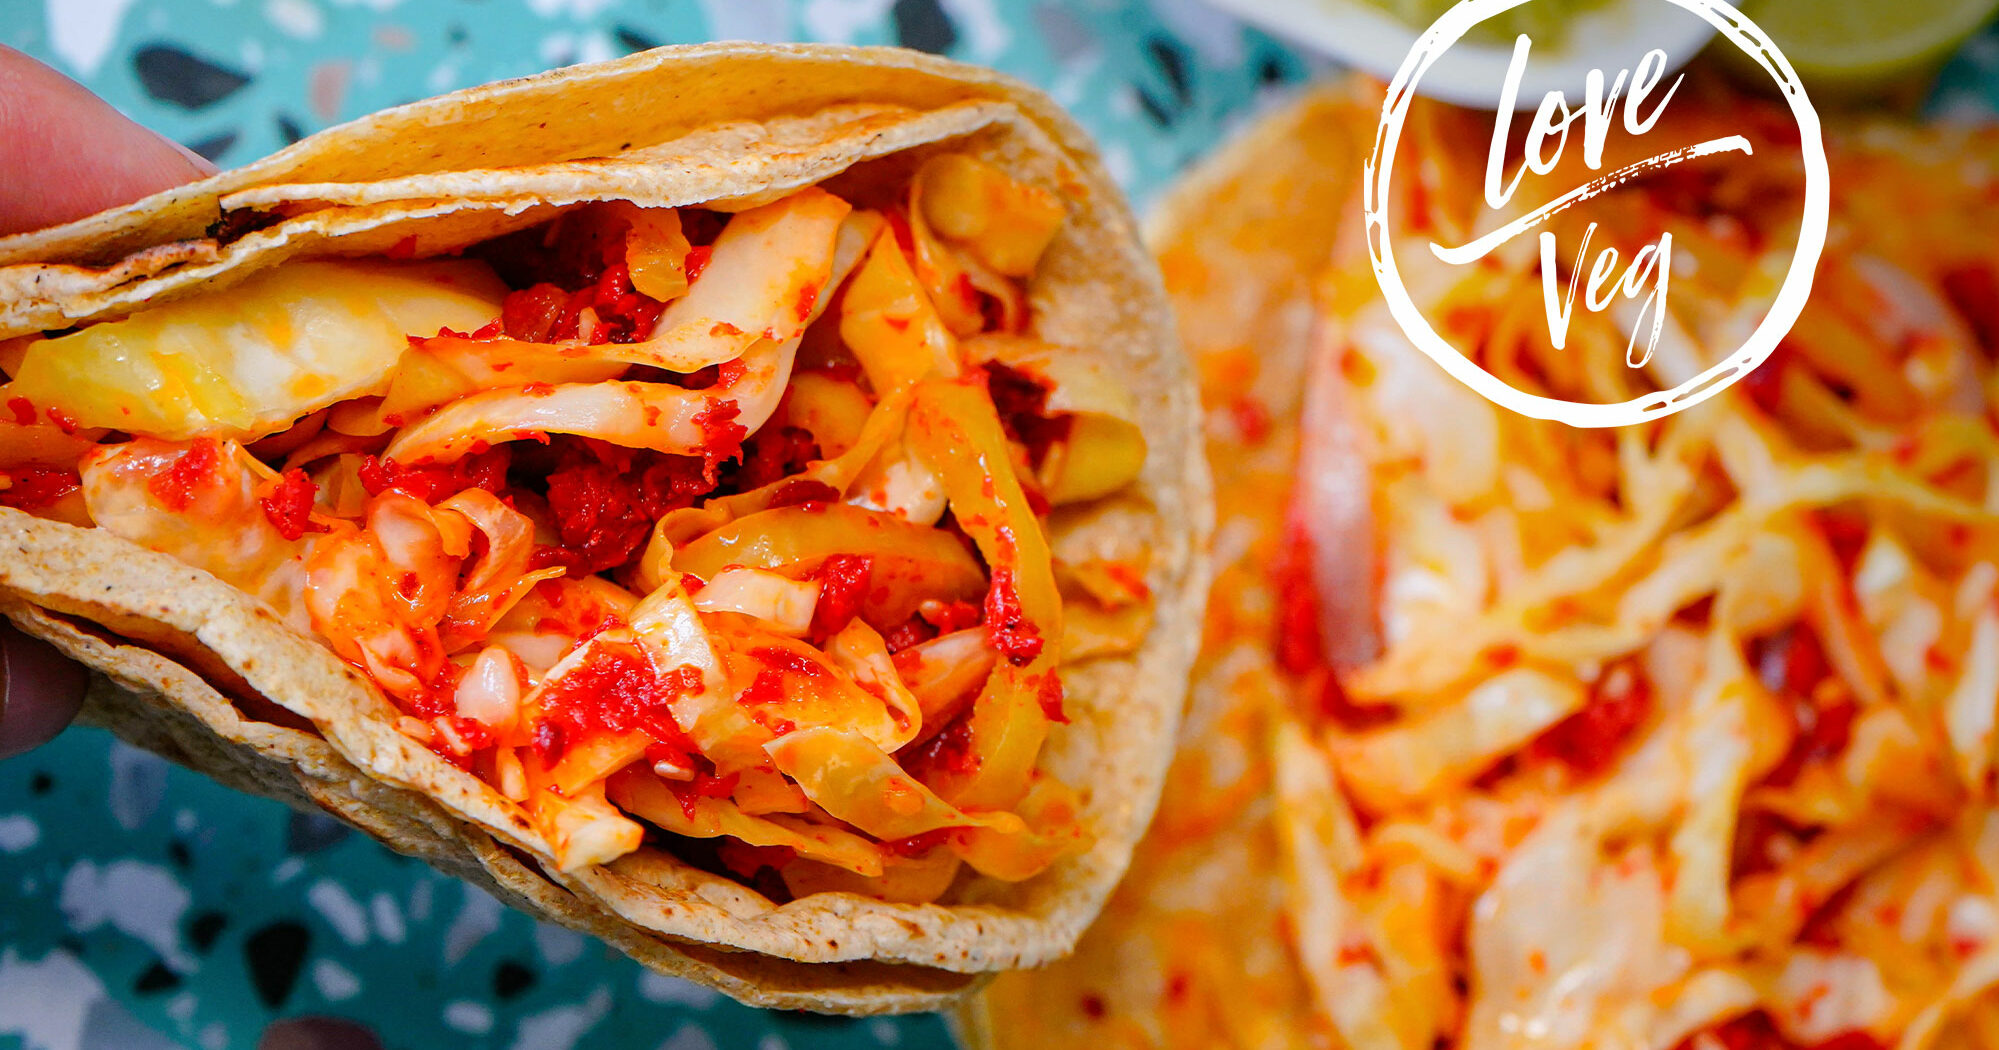 Tacos de col con chorizo y chile güero | Love Veg